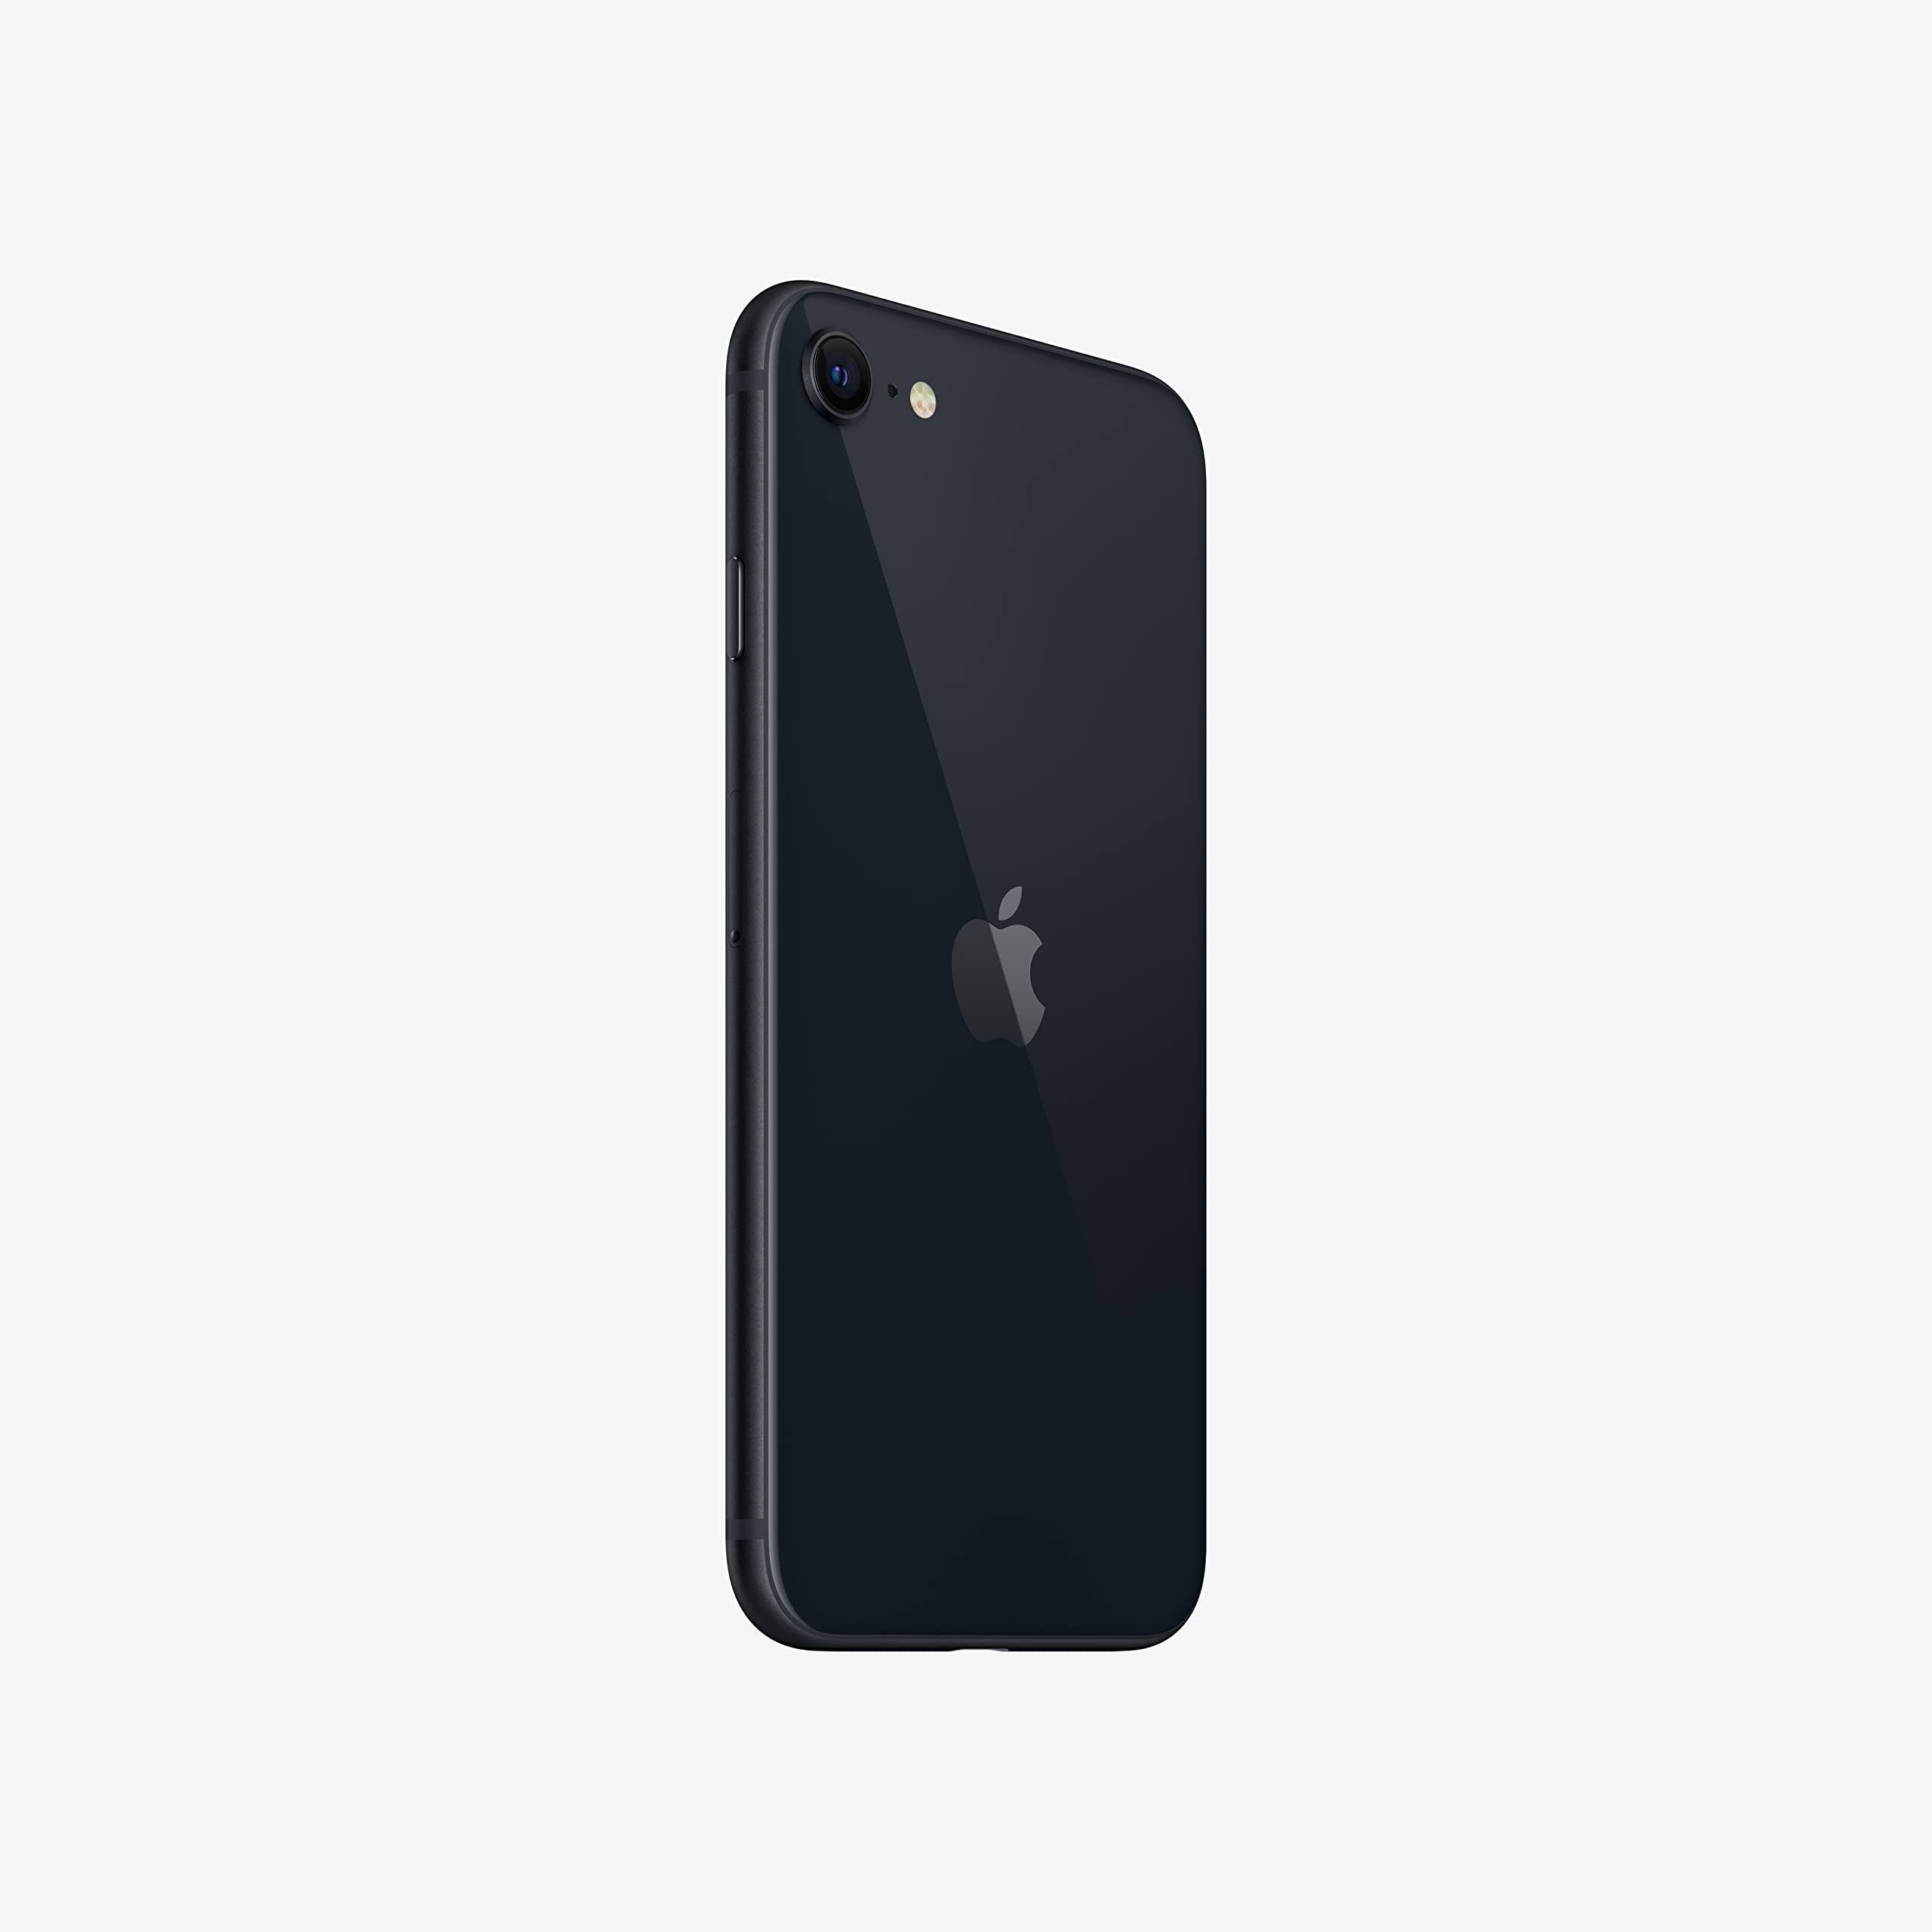 TracFone Apple iPhone SE 5G (3rd Generation), 64GB, Black - Prepaid Smartphone (Locked)